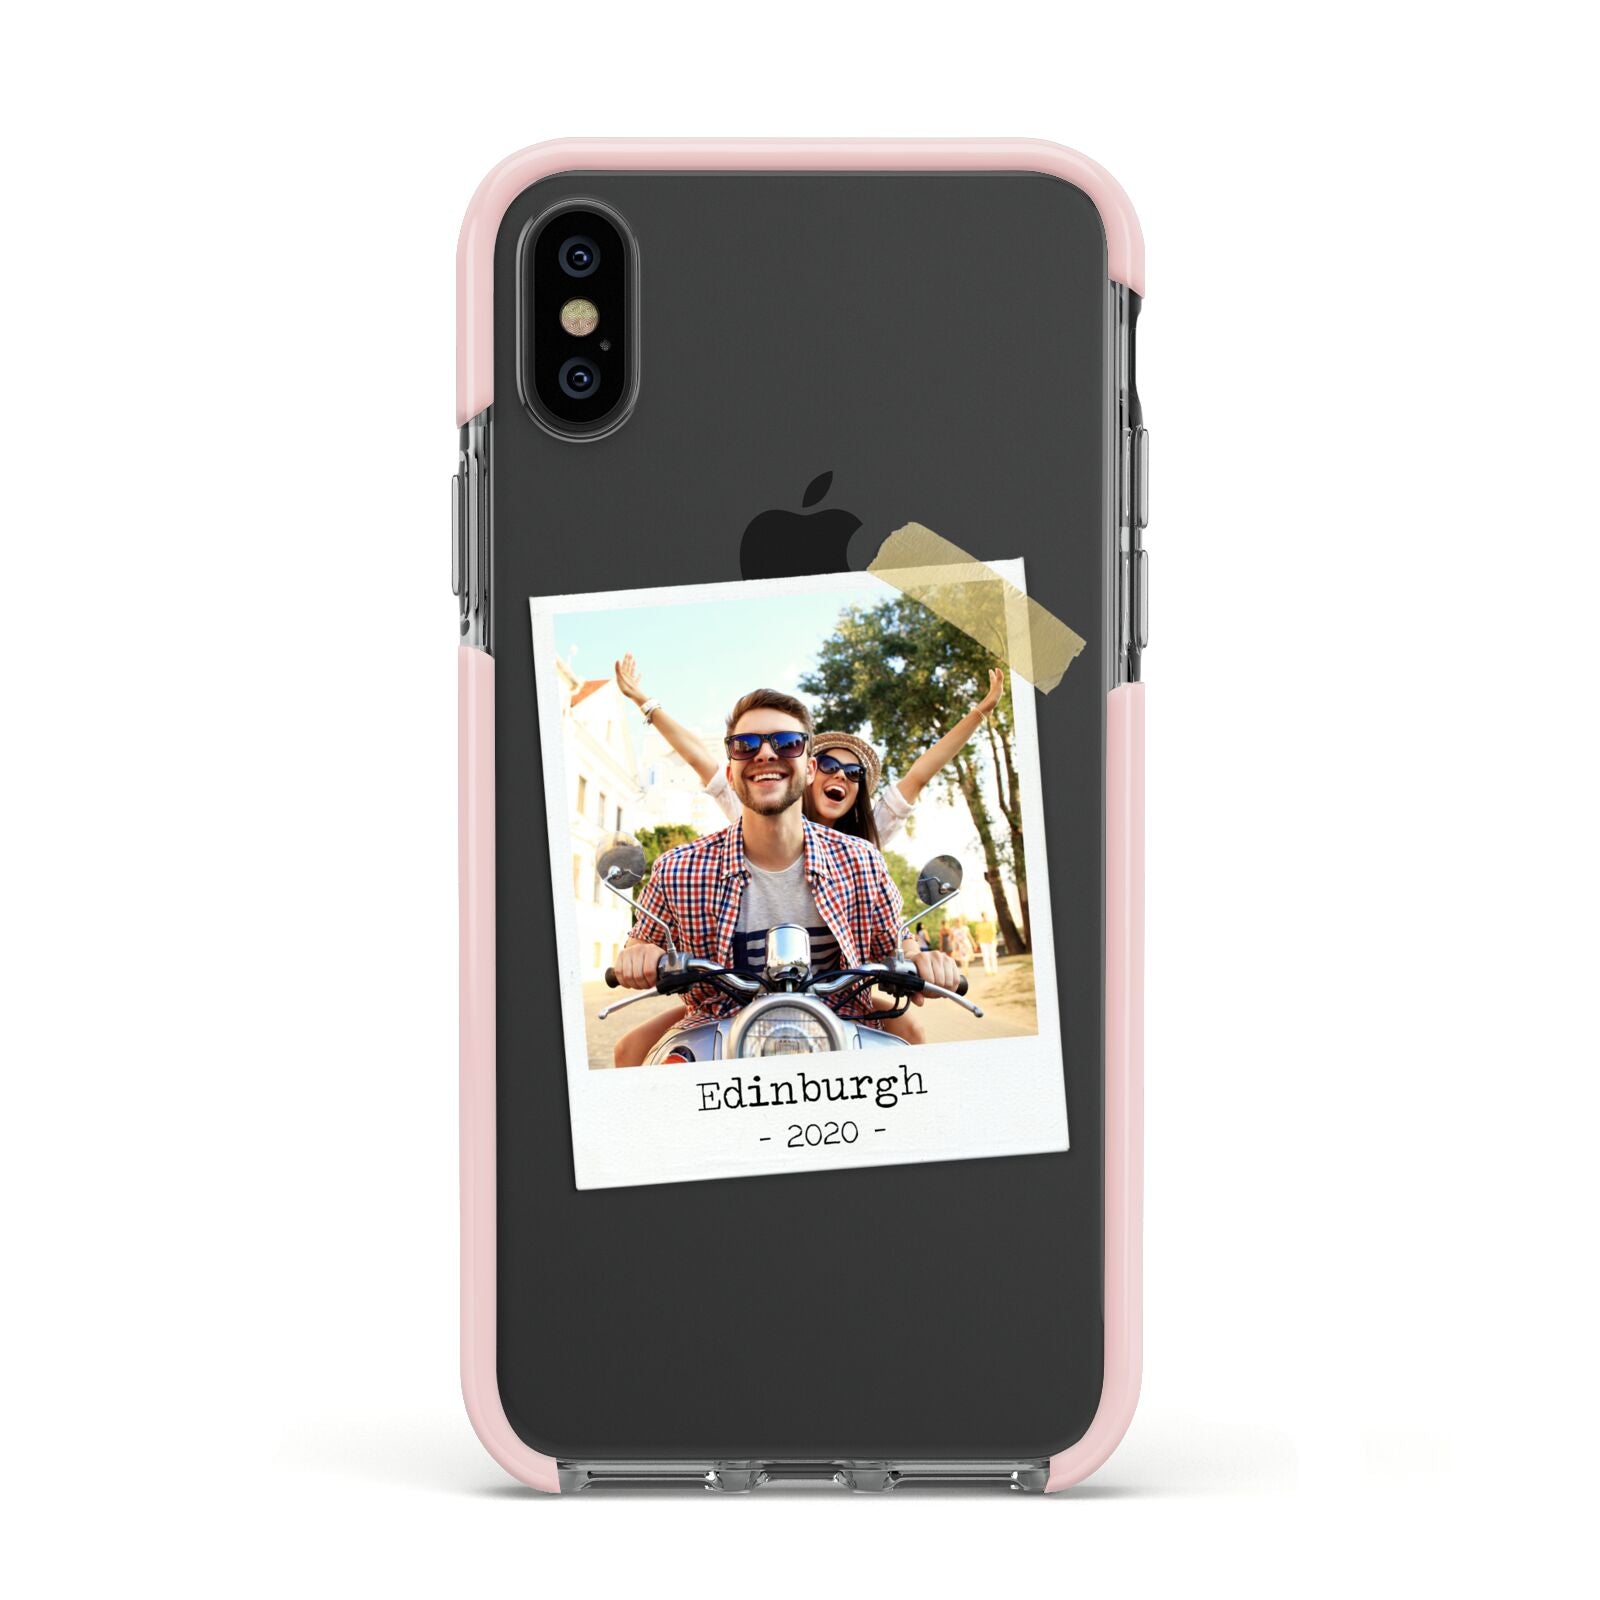 Taped Holiday Snap Photo Upload Apple iPhone Xs Impact Case Pink Edge on Black Phone